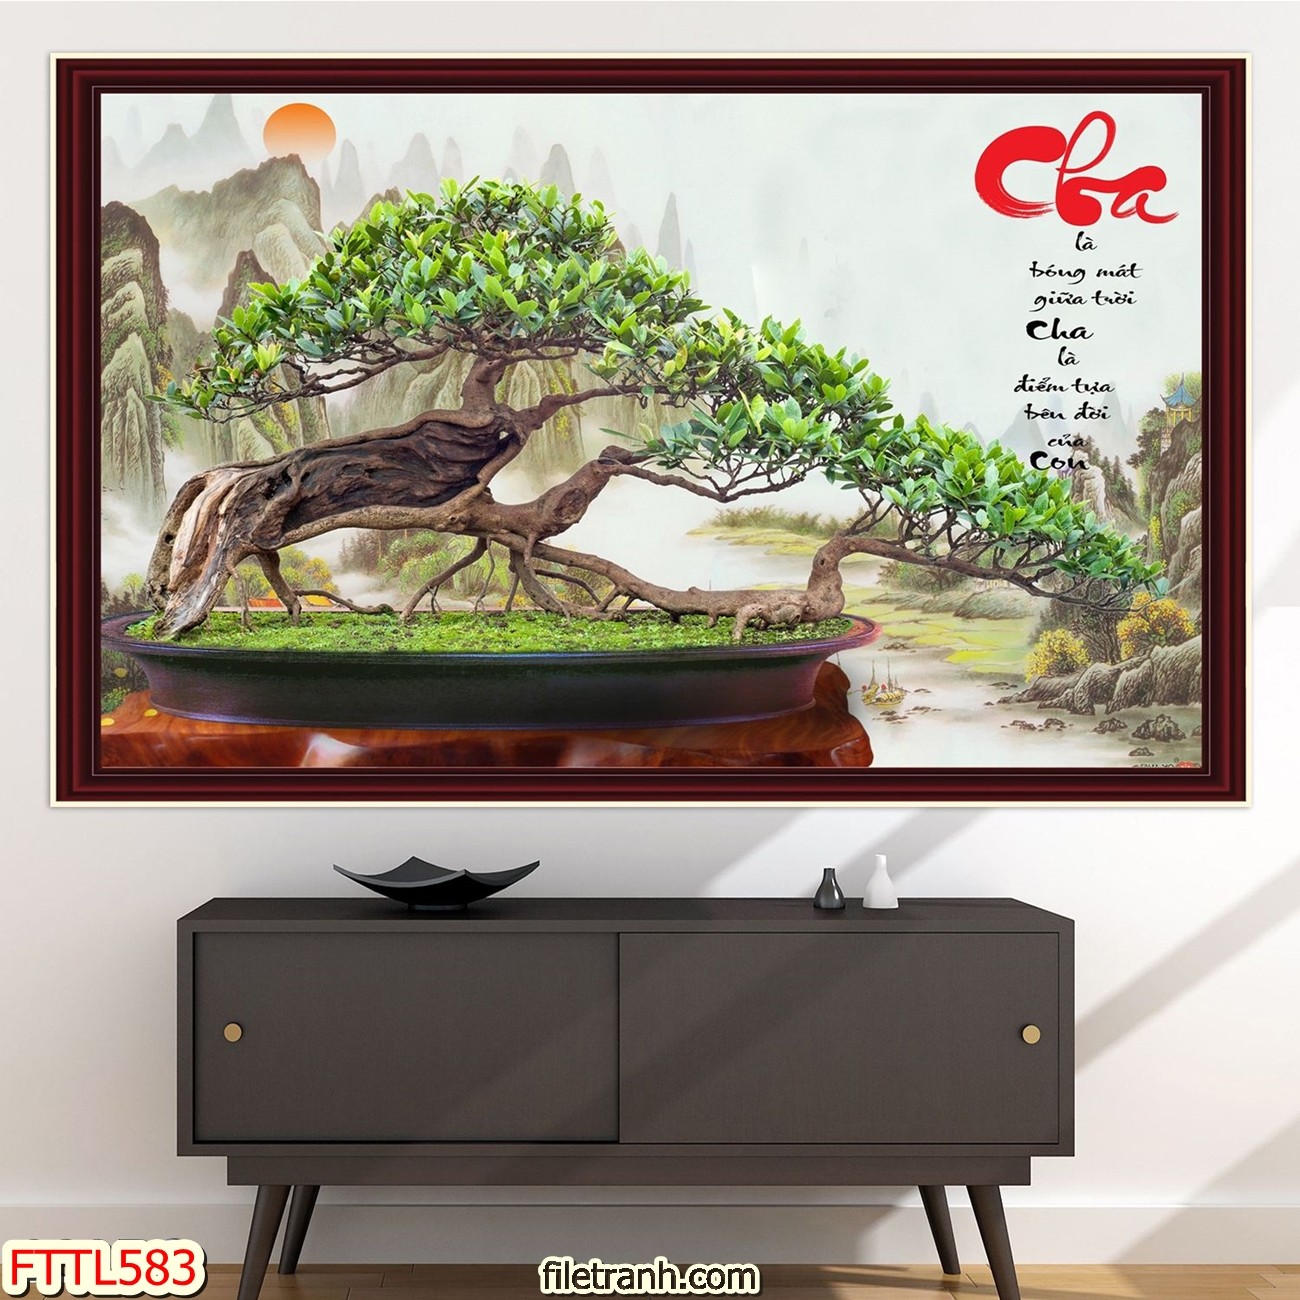 https://filetranh.com/file-tranh-chau-mai-bonsai/file-tranh-chau-mai-bonsai-fttl583.html